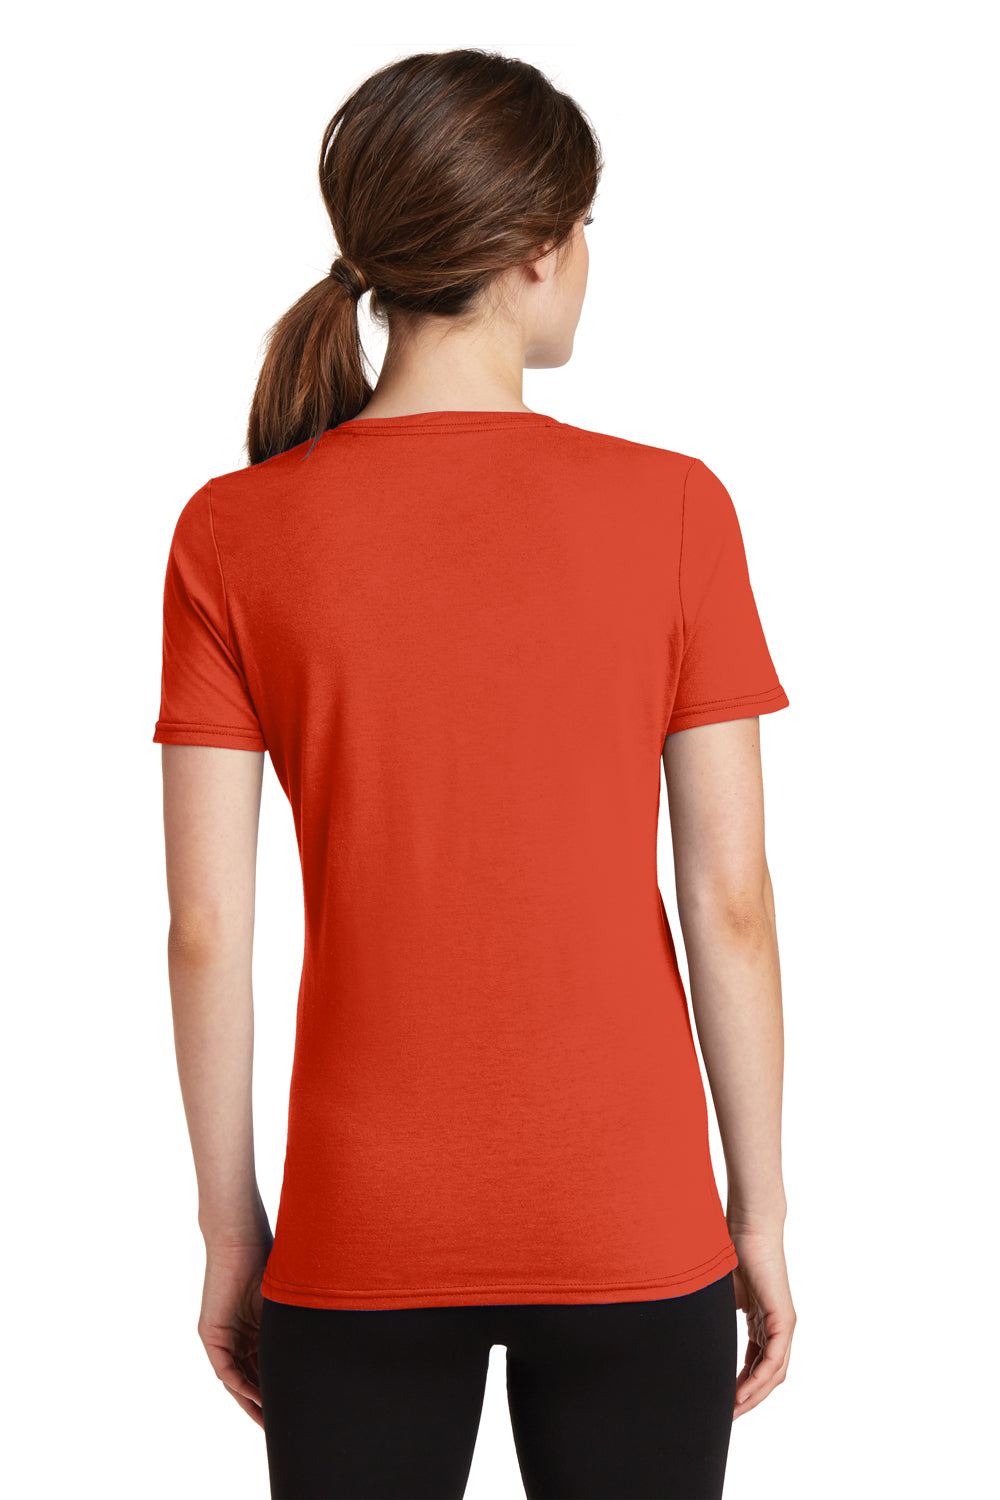 Port & Company LPC381V Womens Dry Zone Performance Moisture Wicking Short Sleeve V-Neck T-Shirt Orange Back